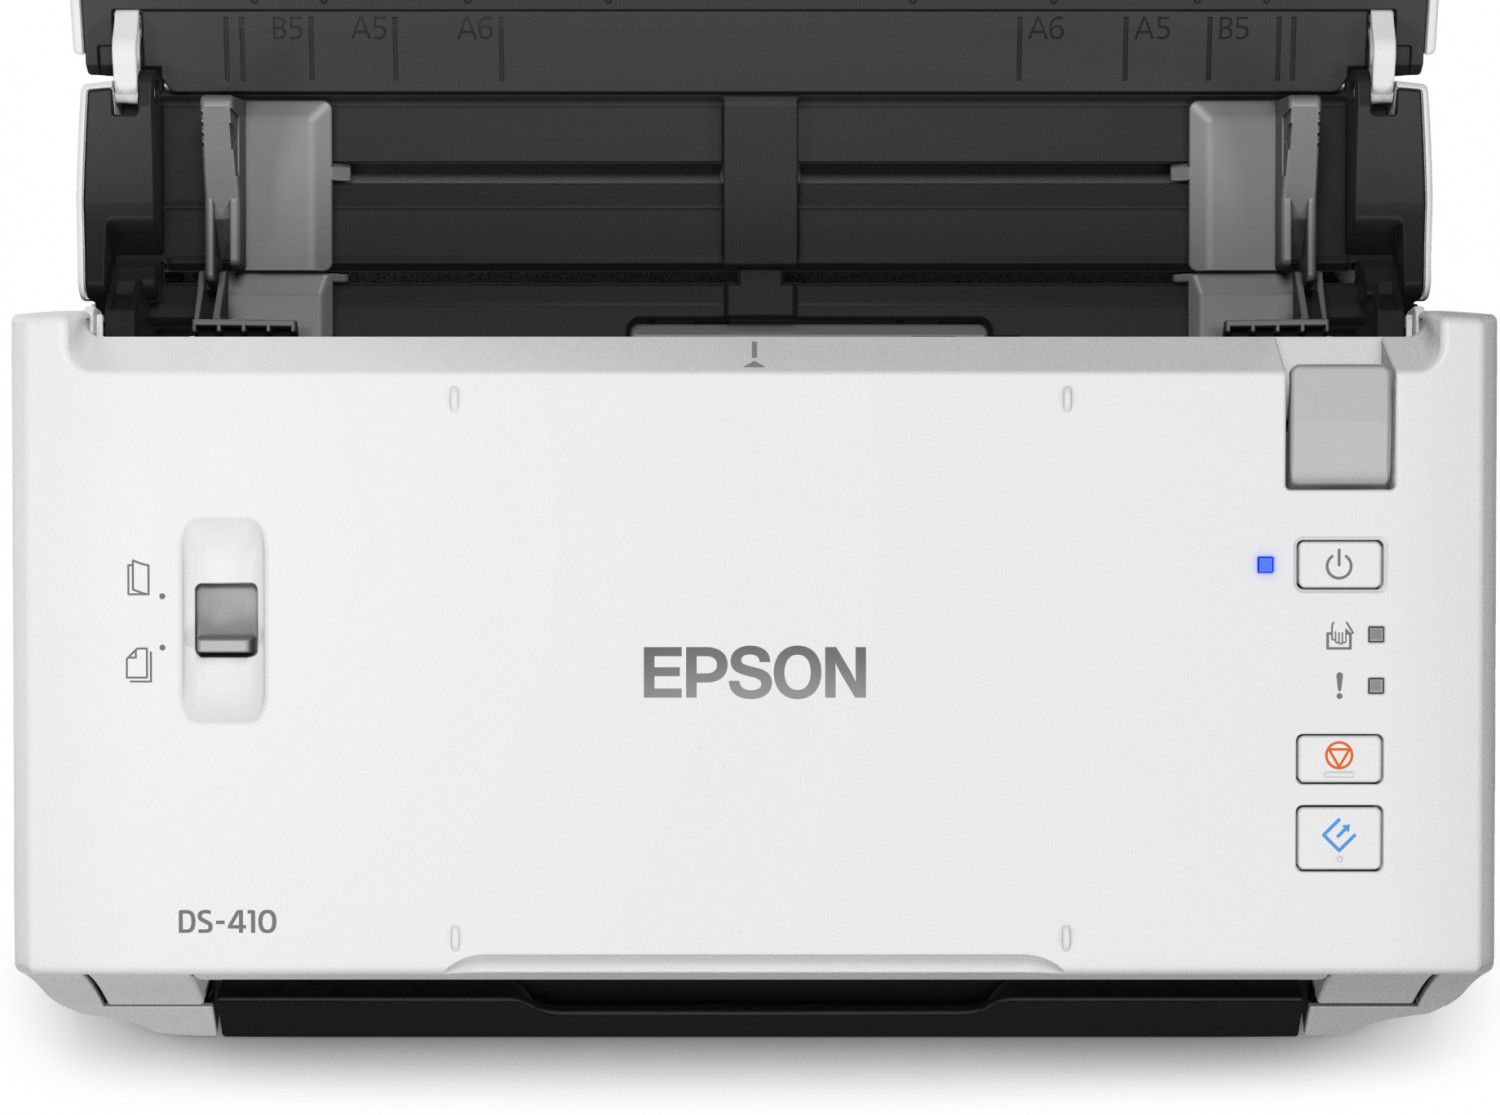 Scanner Epson DS-410, dimensiune A4, tip sheetfed, viteza scanare: 52 ipm alb-negru si color, rezolutie optica 600x600dpi, ADF Single Pass 50 pagini, duplex, senzor CIS, USB 2.0 Type B, software :Document Capture Pro 2.0, Epson Scan 2, Posibilitatea prelungirii garantiei pana la 3 ani, doar cu_3